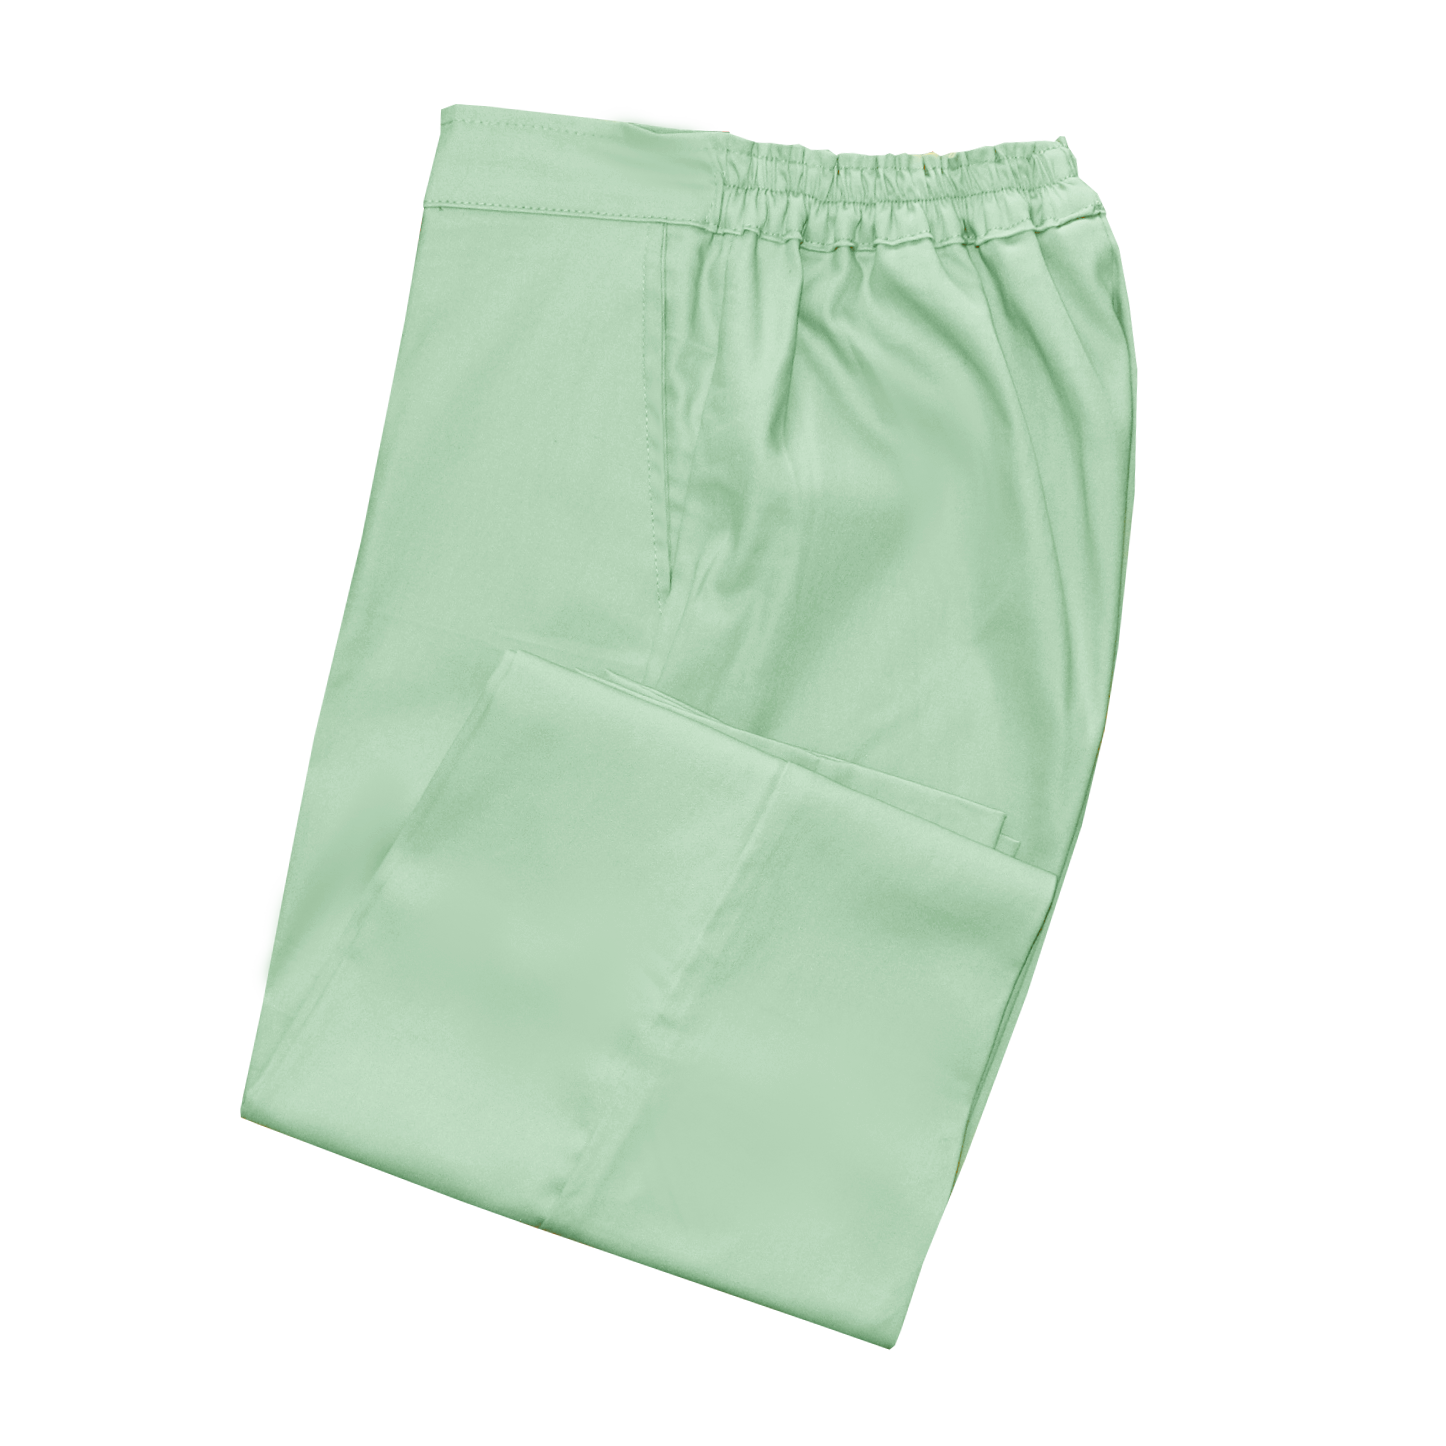 Pantalon verde lima - Comprar en Ambos Know How